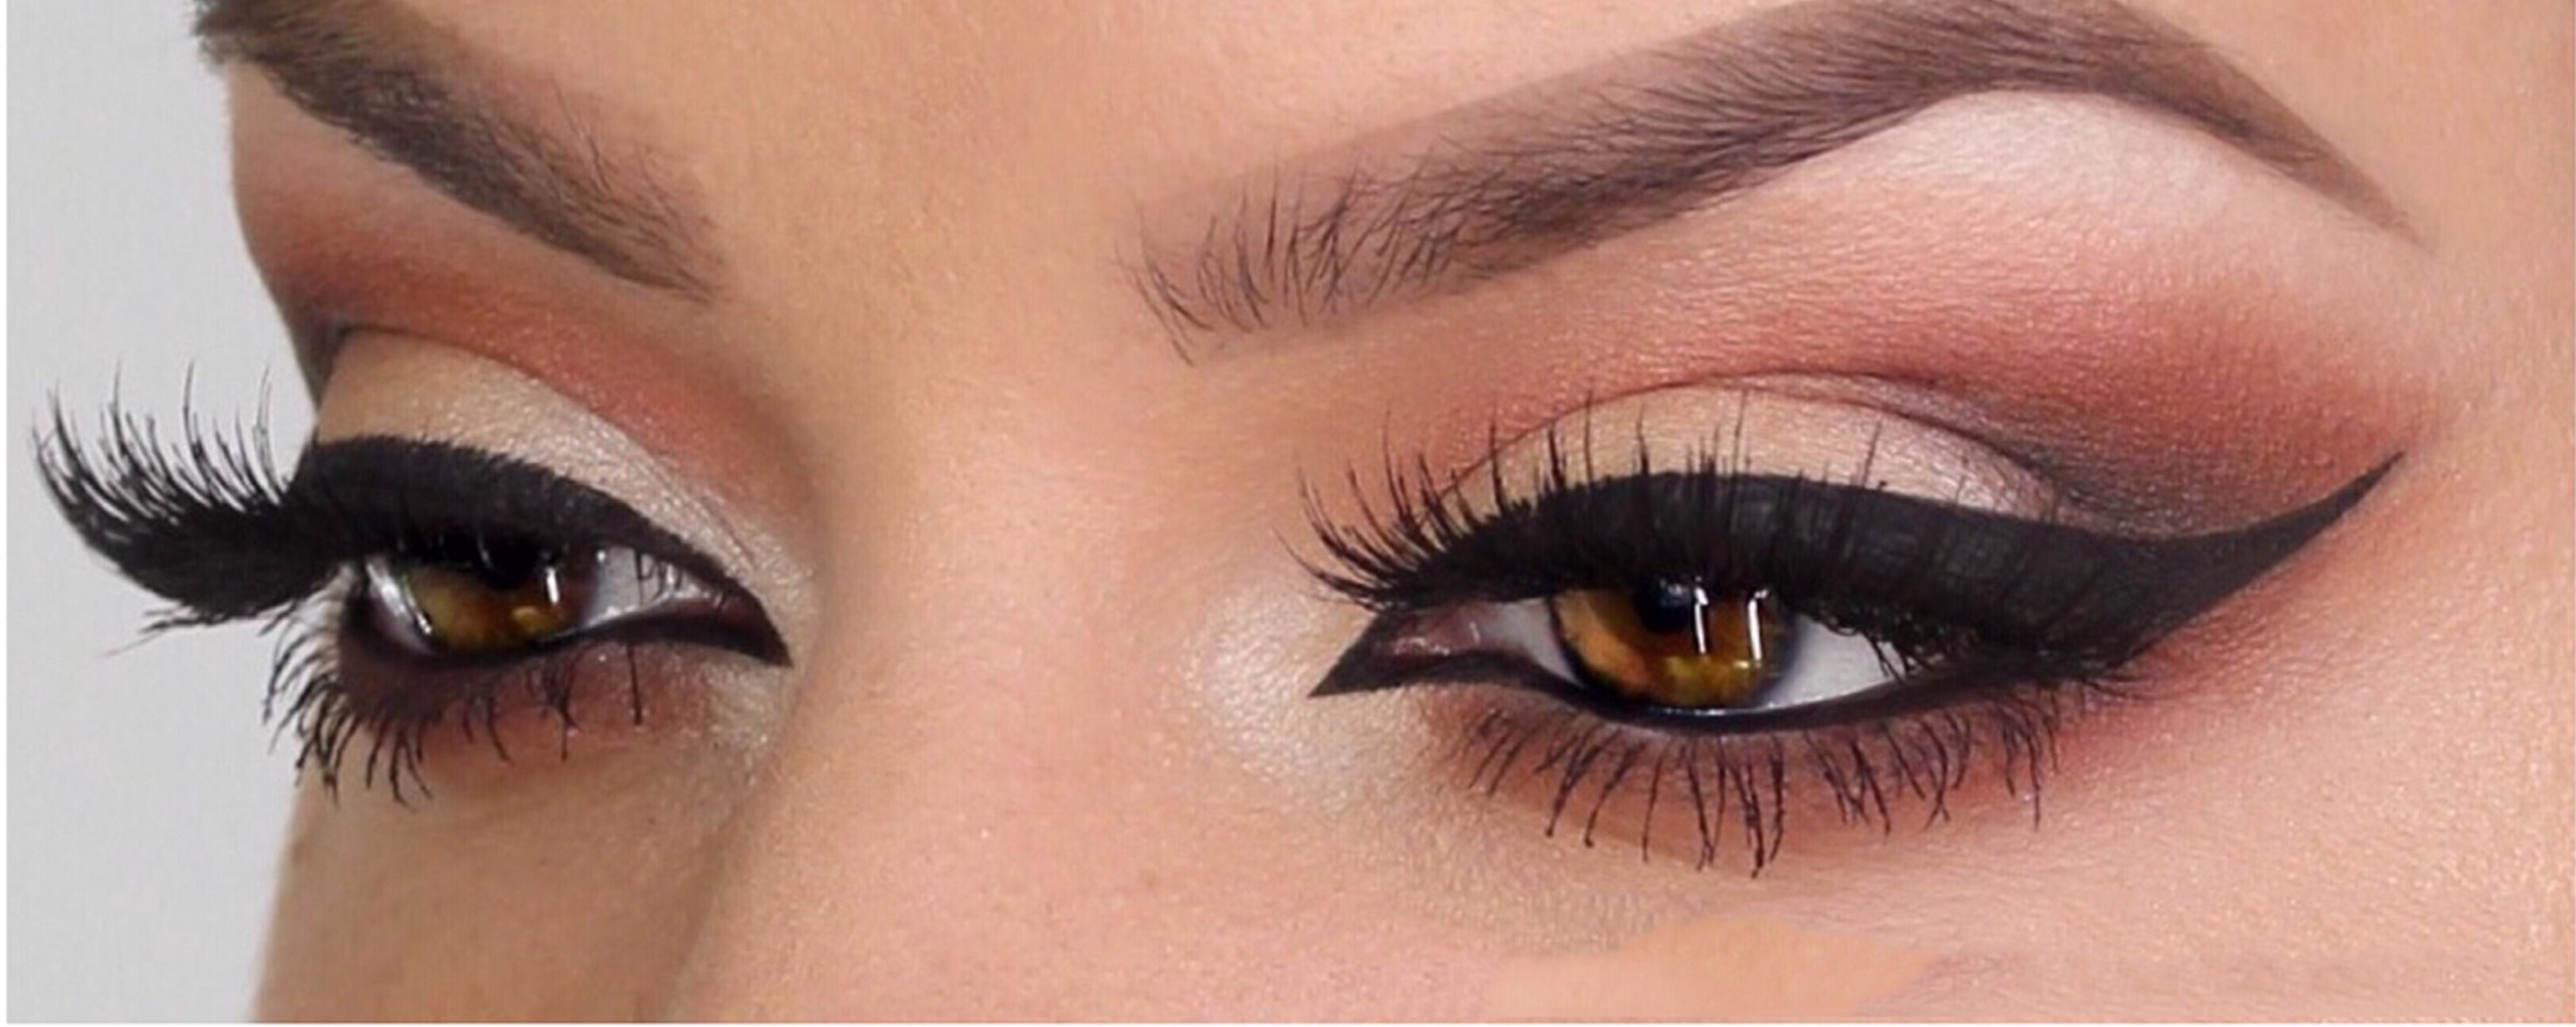 Winged Eye Makeup How To Apply Liquid Eyeliner Like A Pro Sangam Vesh Medium